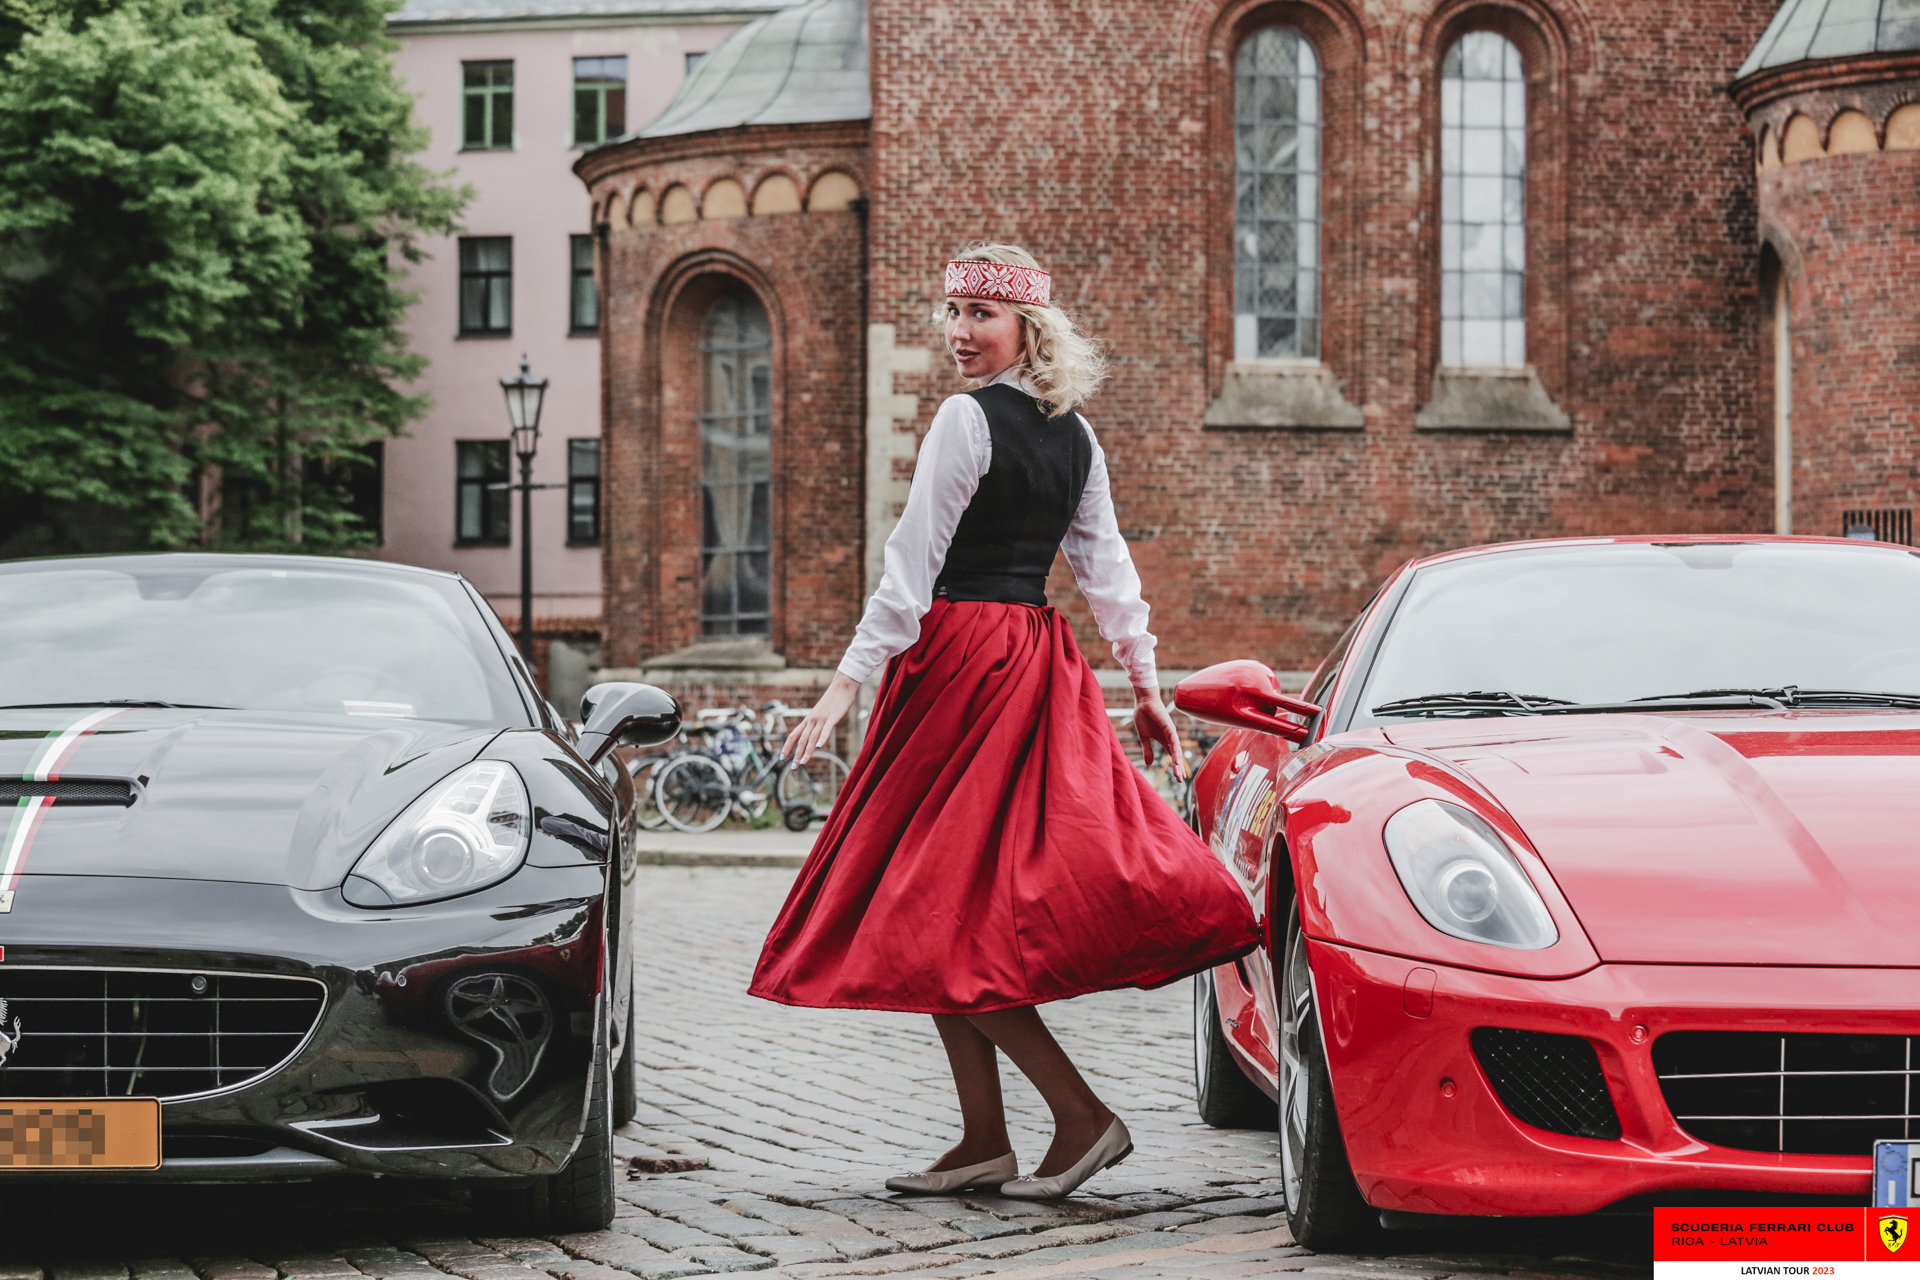 A grid girl ‘dancing’ between two Ferraris. 